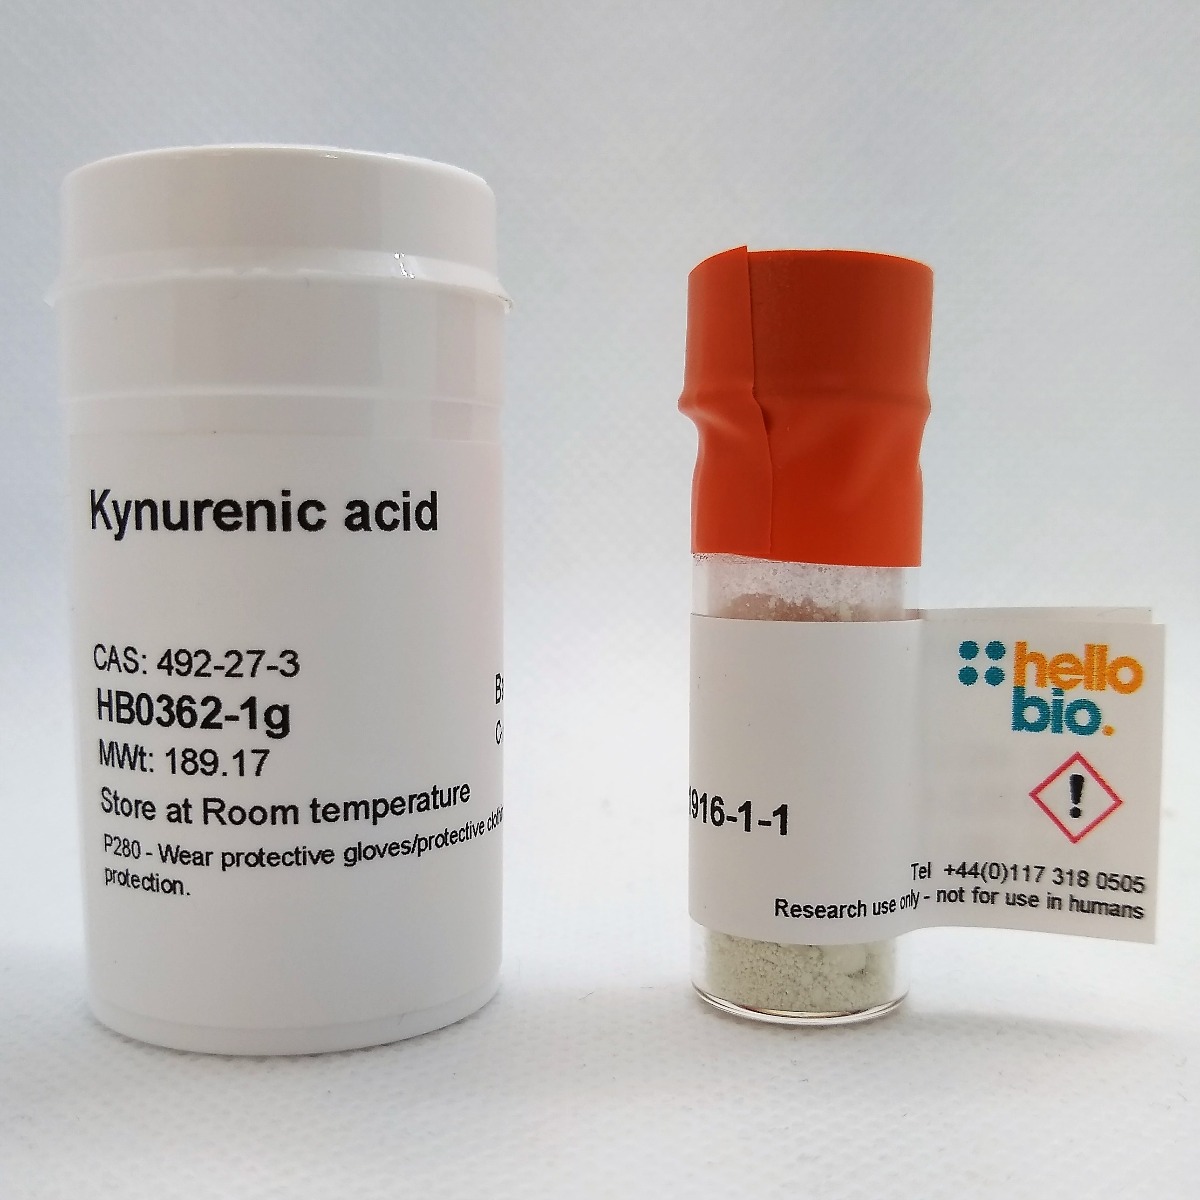 Kynurenic acid product vial image | Hello Bio